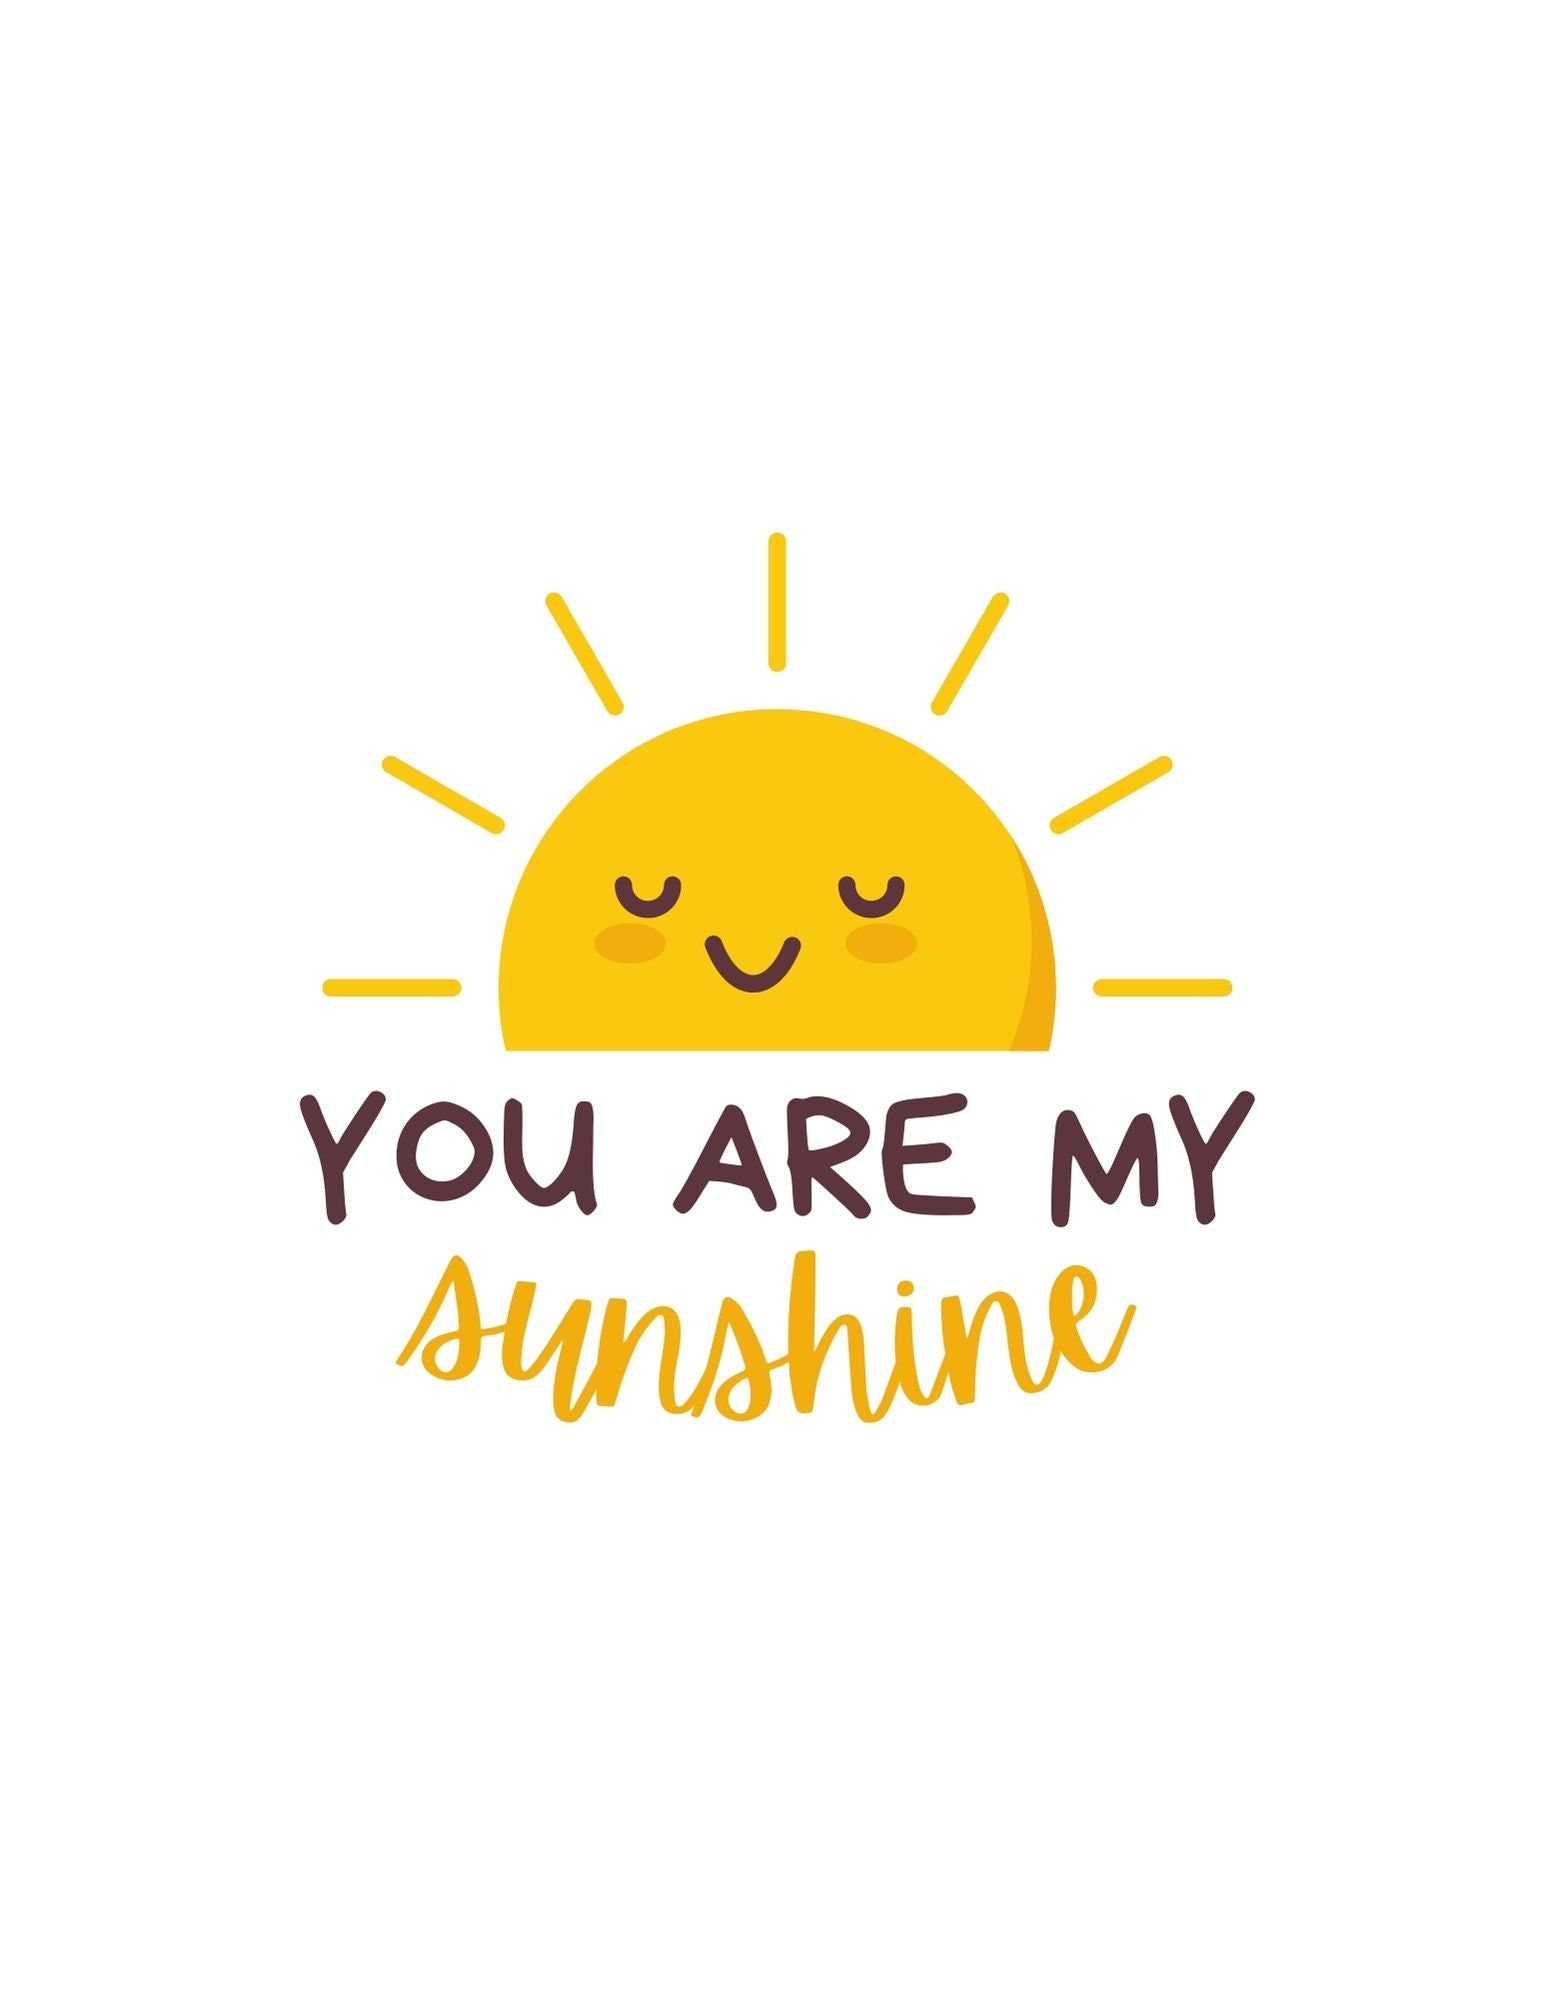 You Are My Sunshine by Yamini Polnati